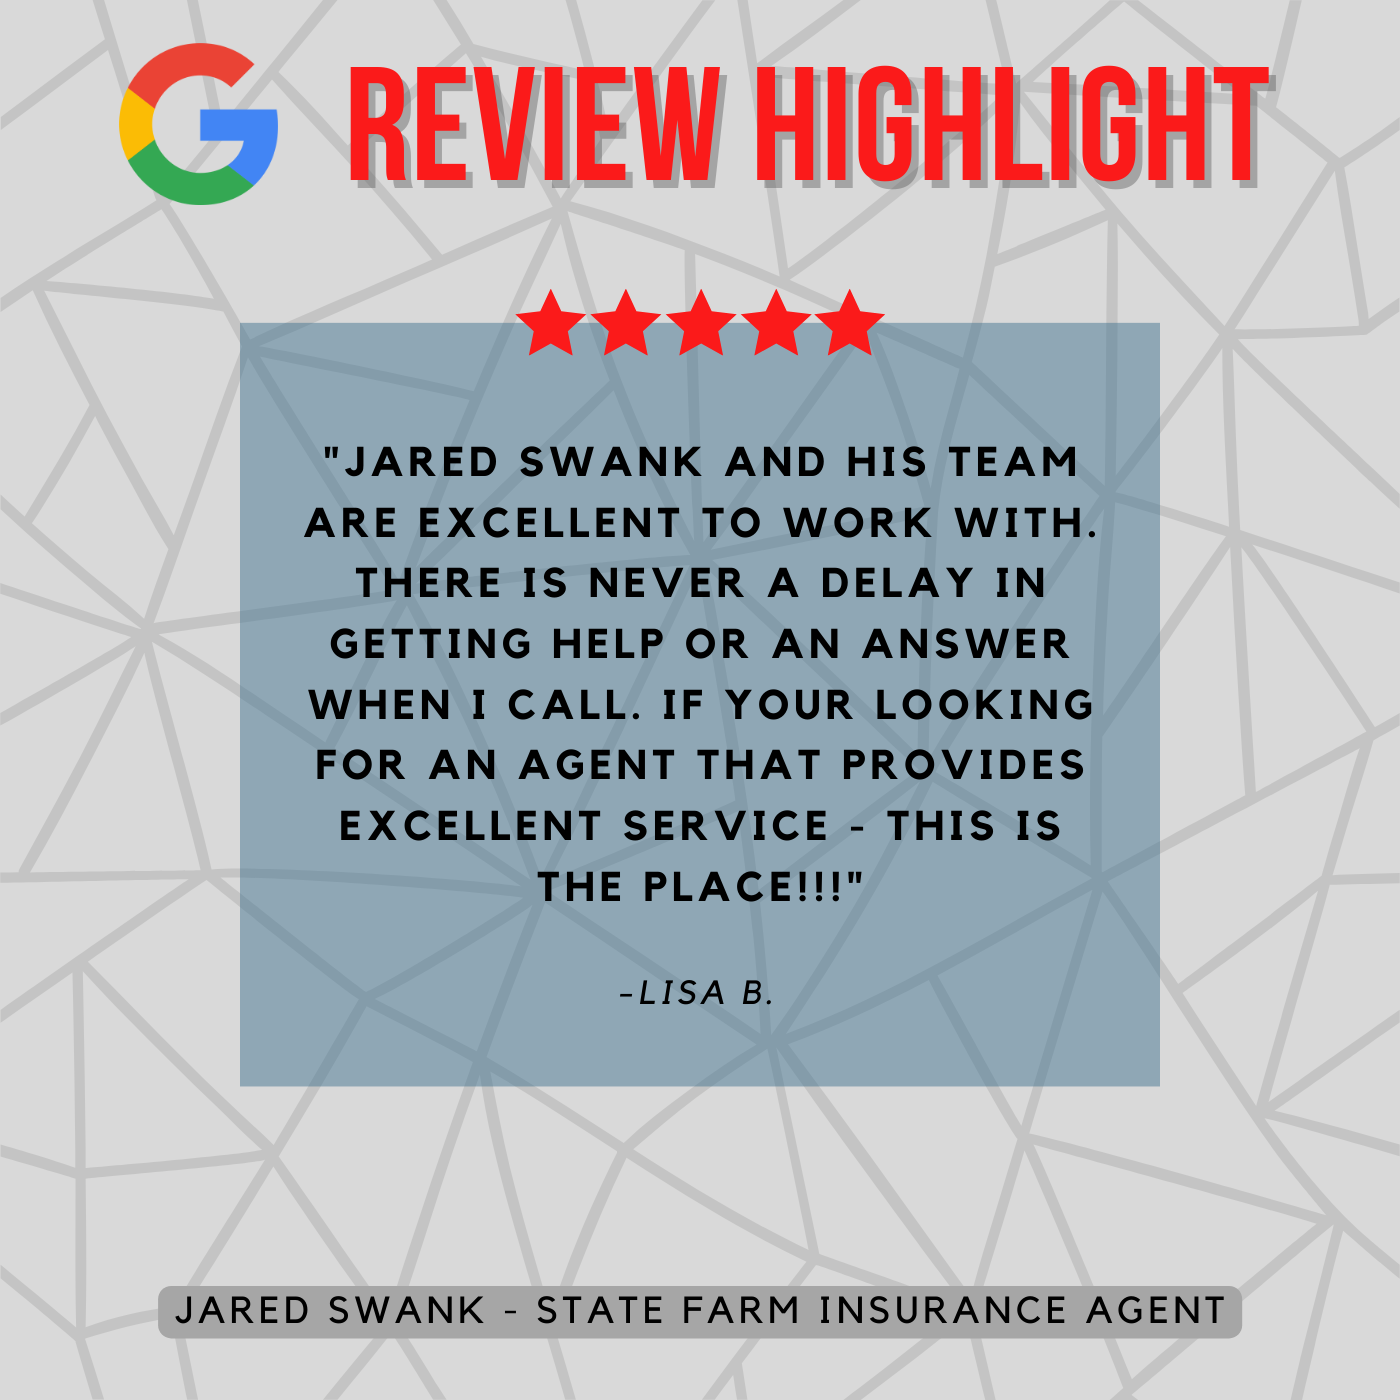 Jared Swank - State Farm Insurance Agent